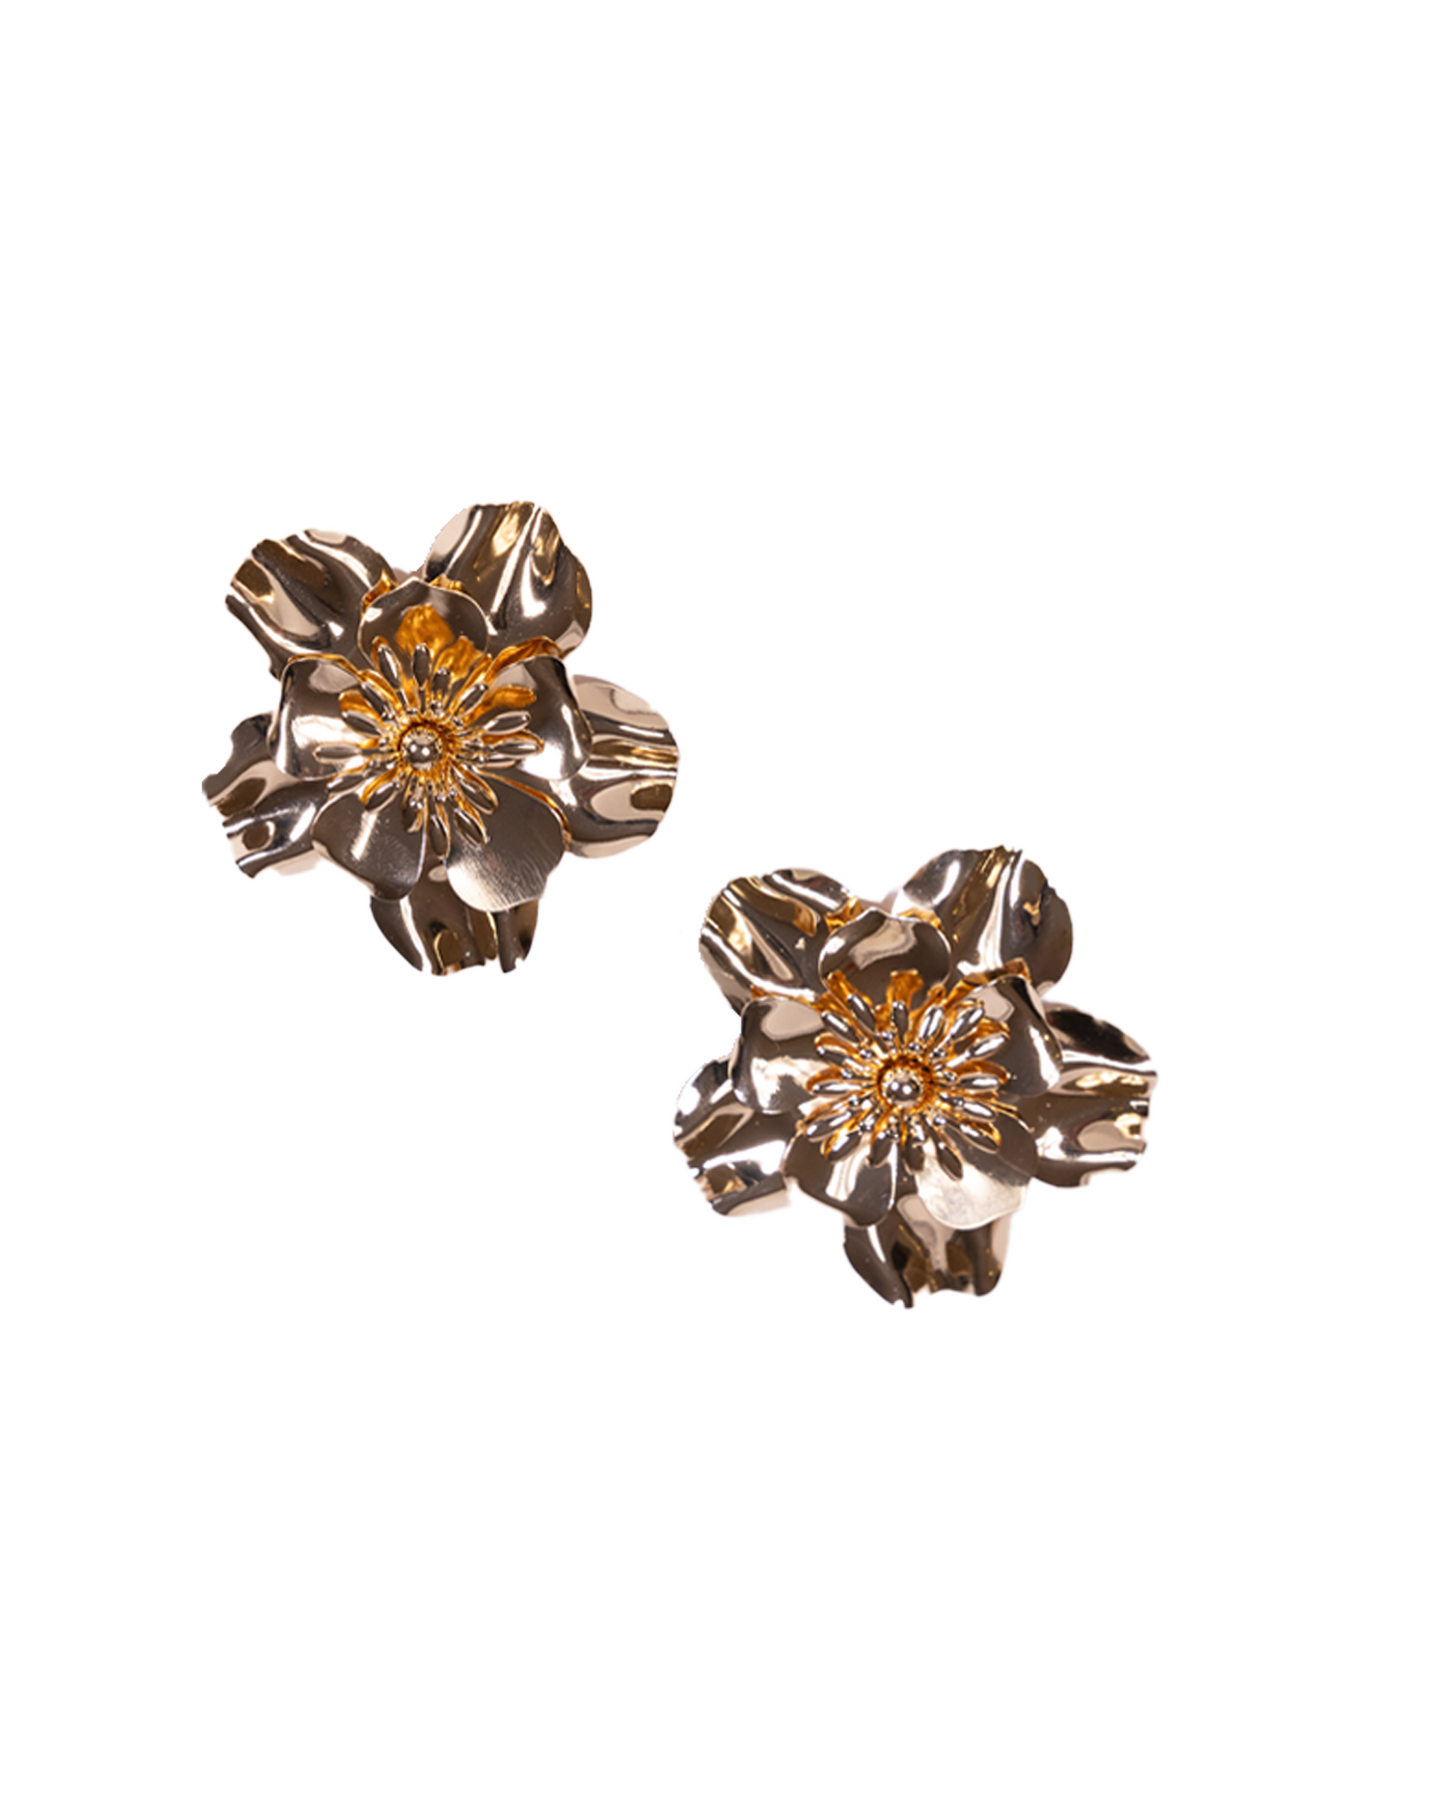 Big gold flower earrings